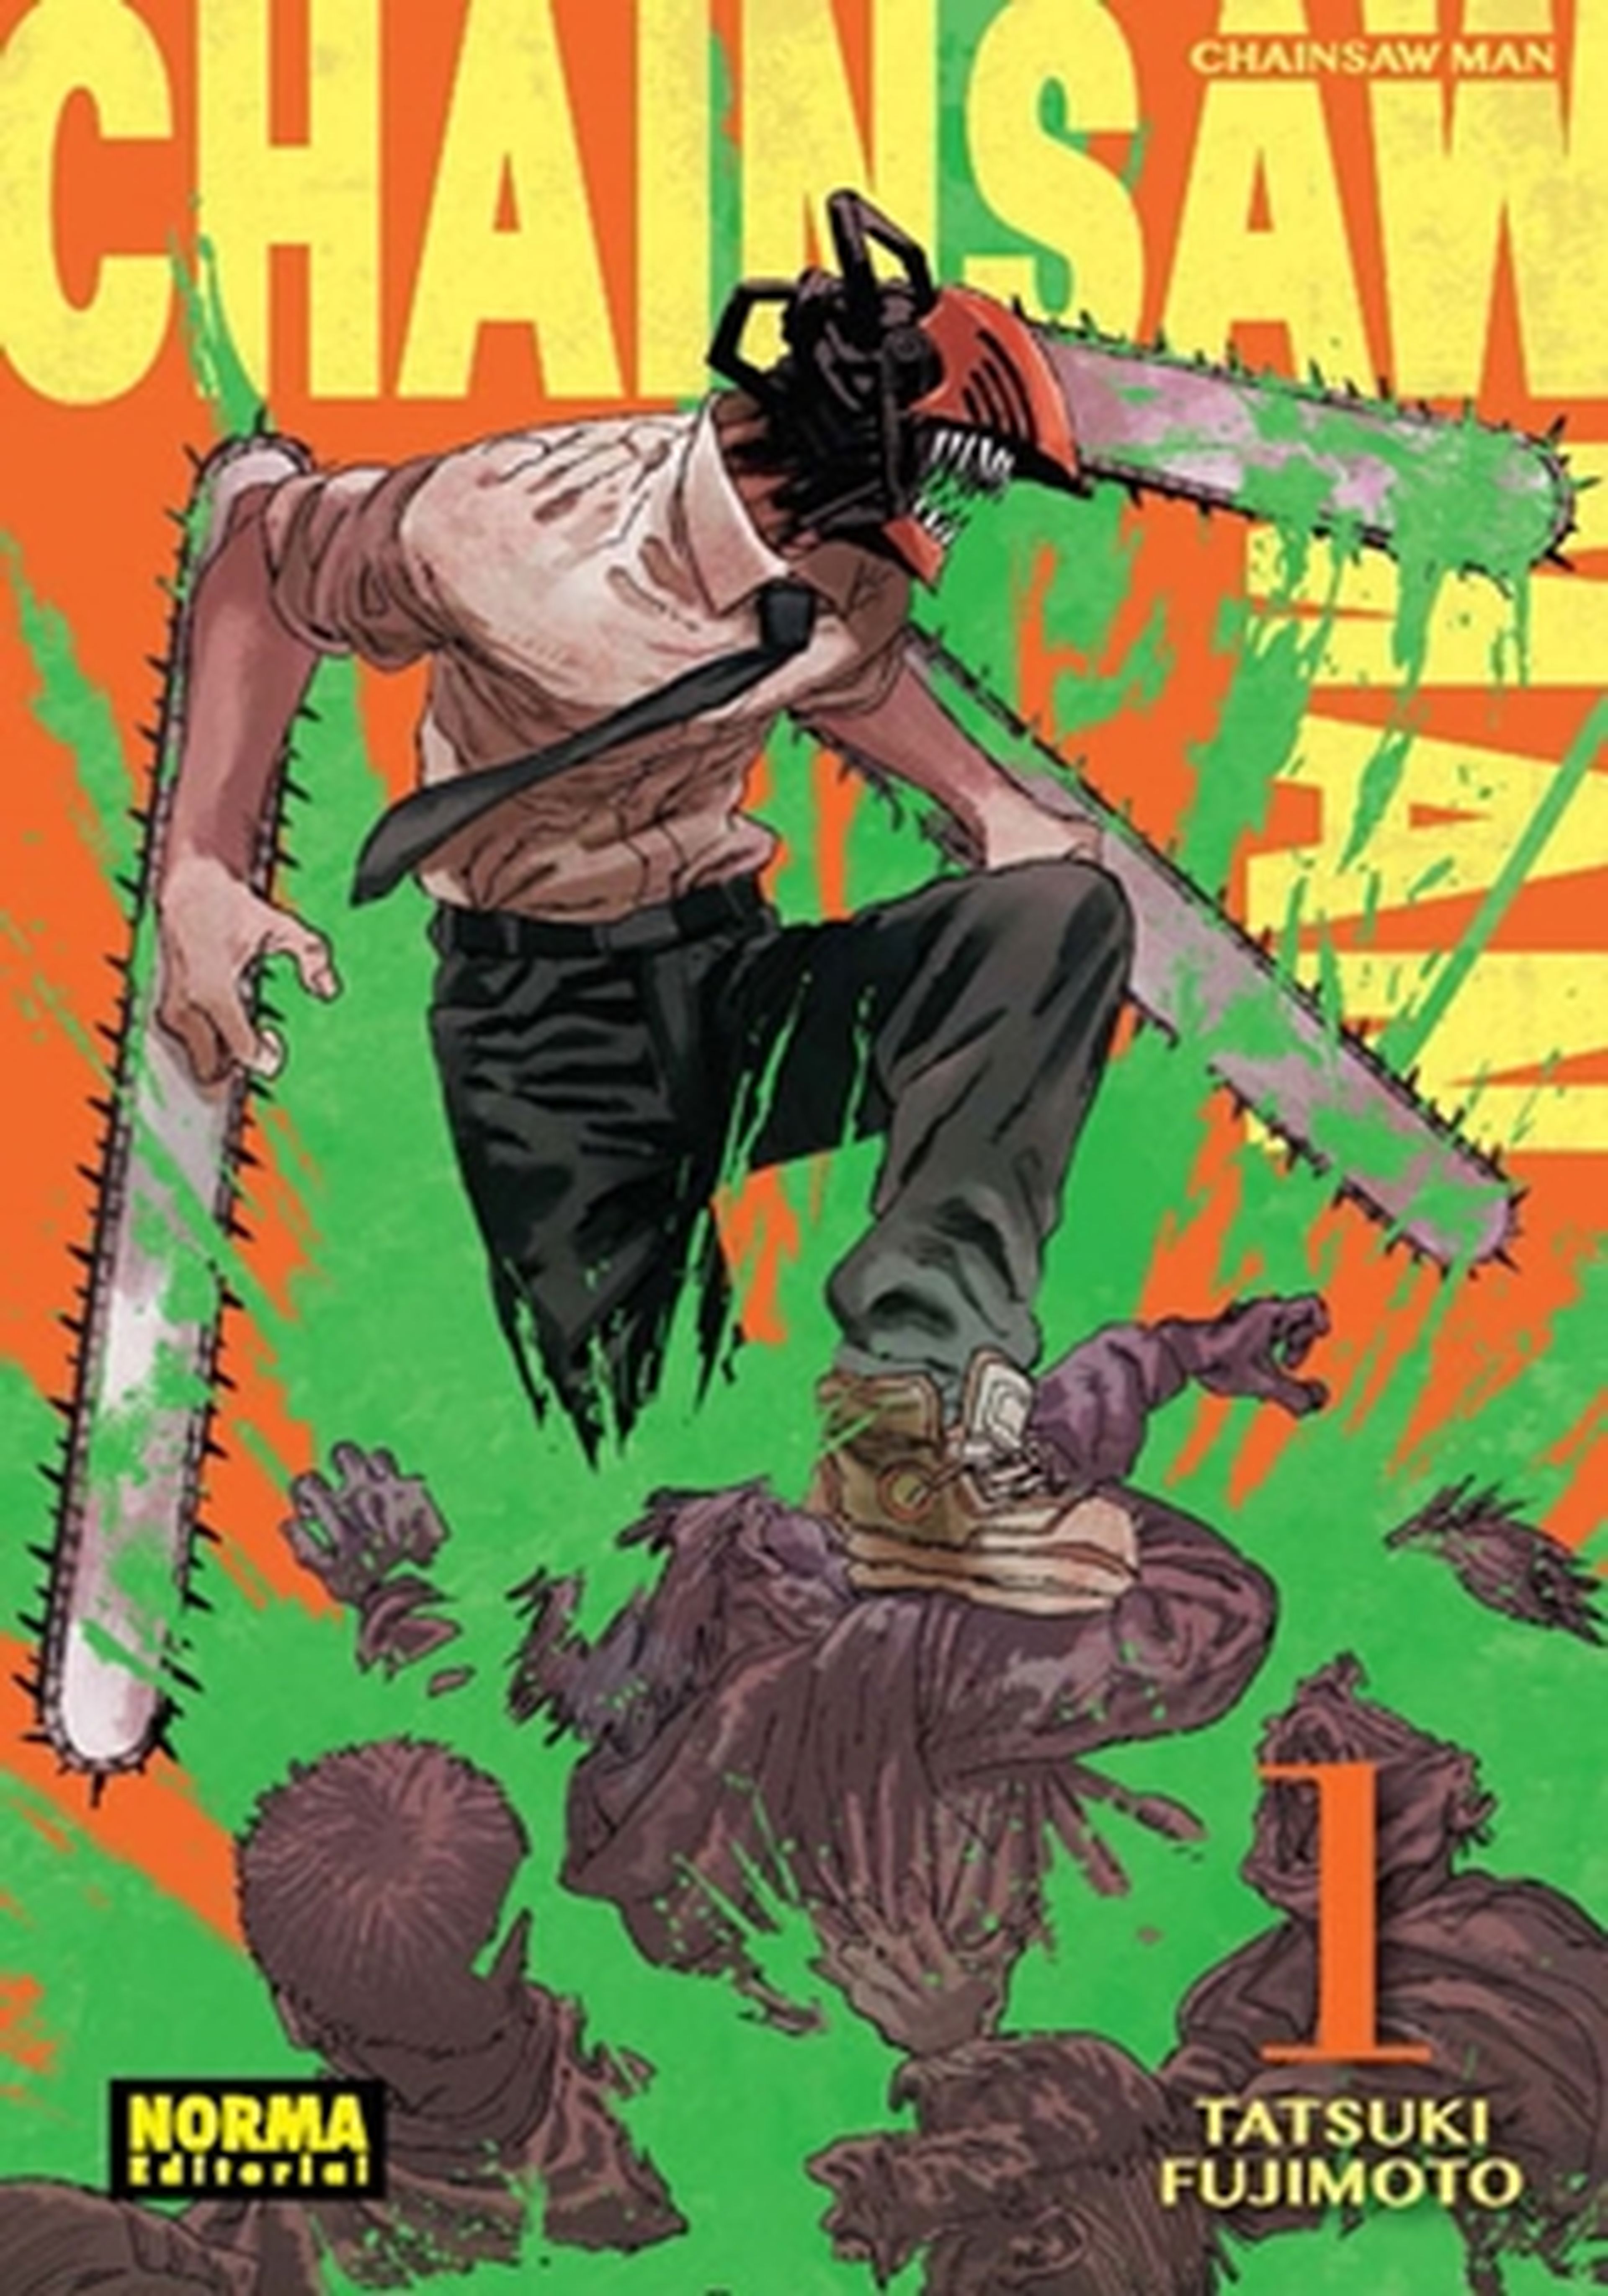 Chainsaw Man portada tomo 1